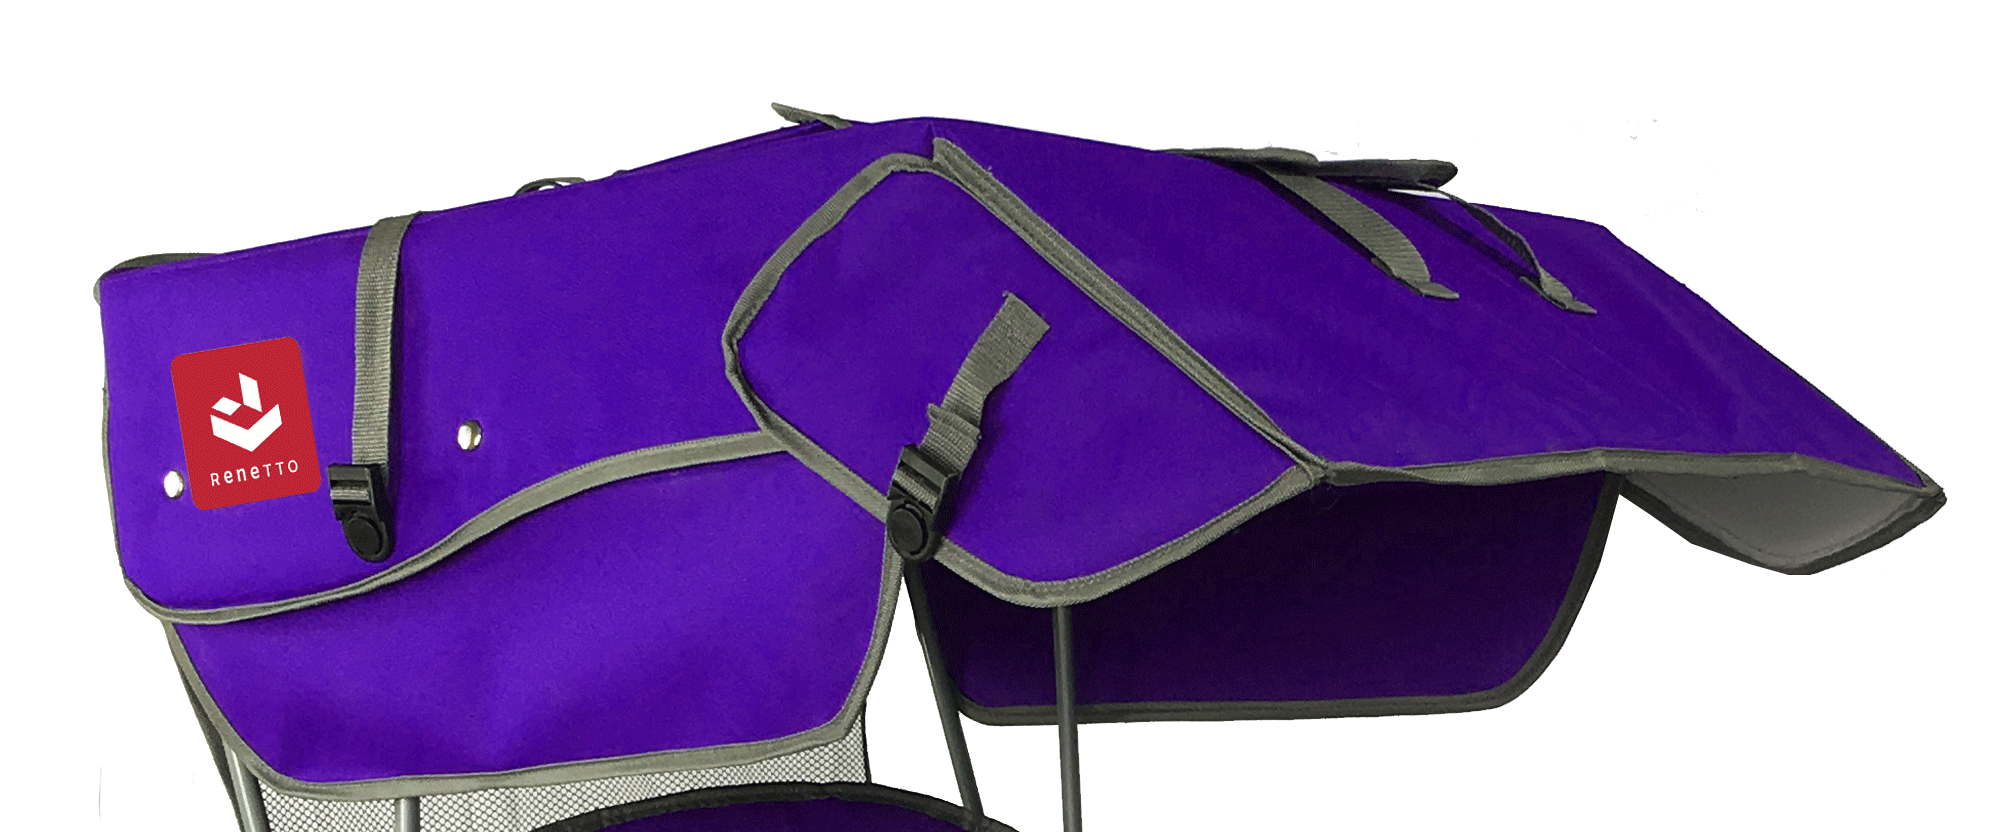 Original Canopy Chair:2 Attachable Shades